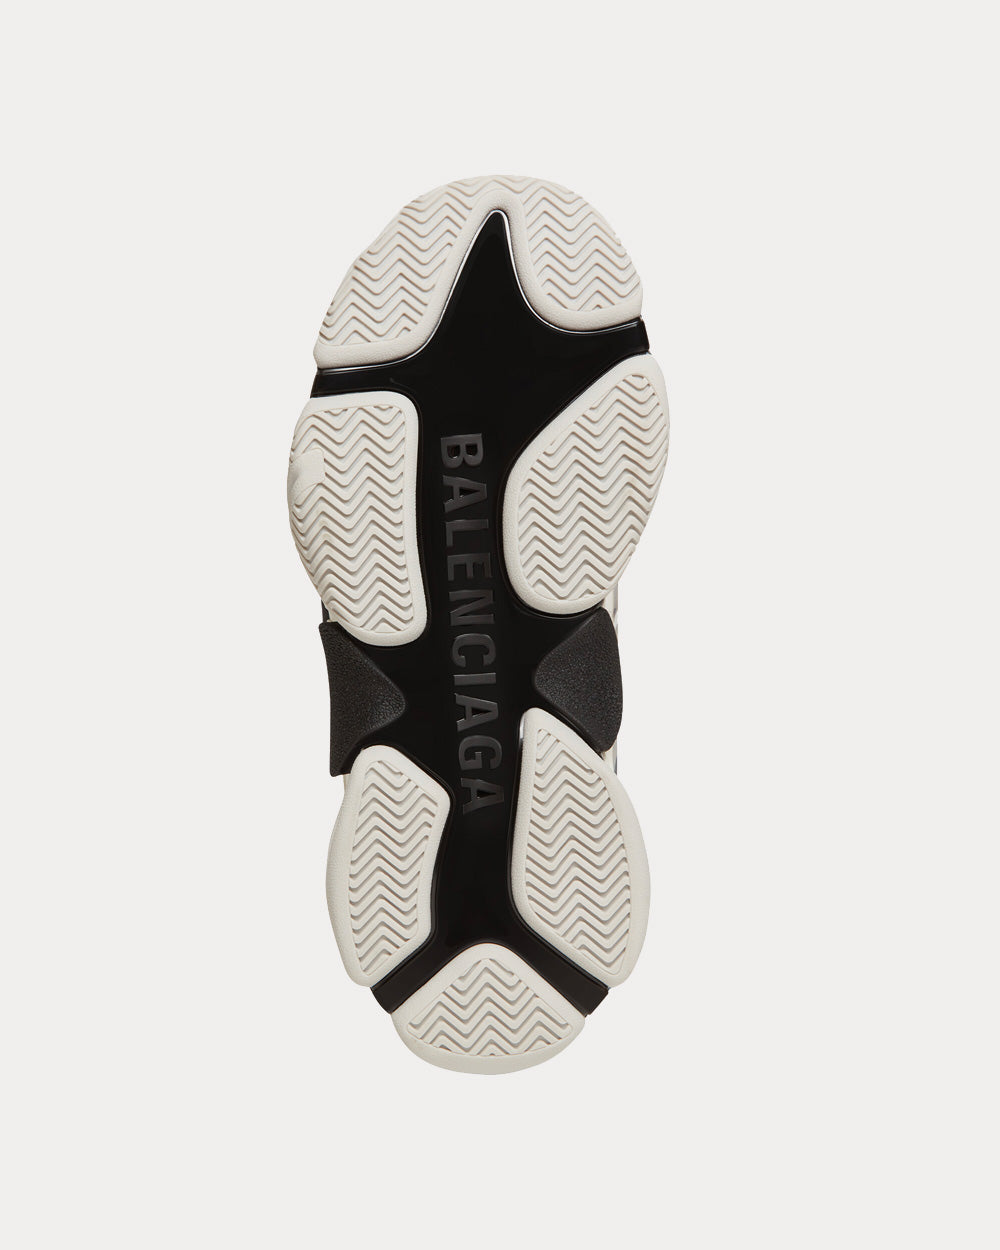 Balenciaga x Adidas - Triple S White / Black Low Top Sneakers